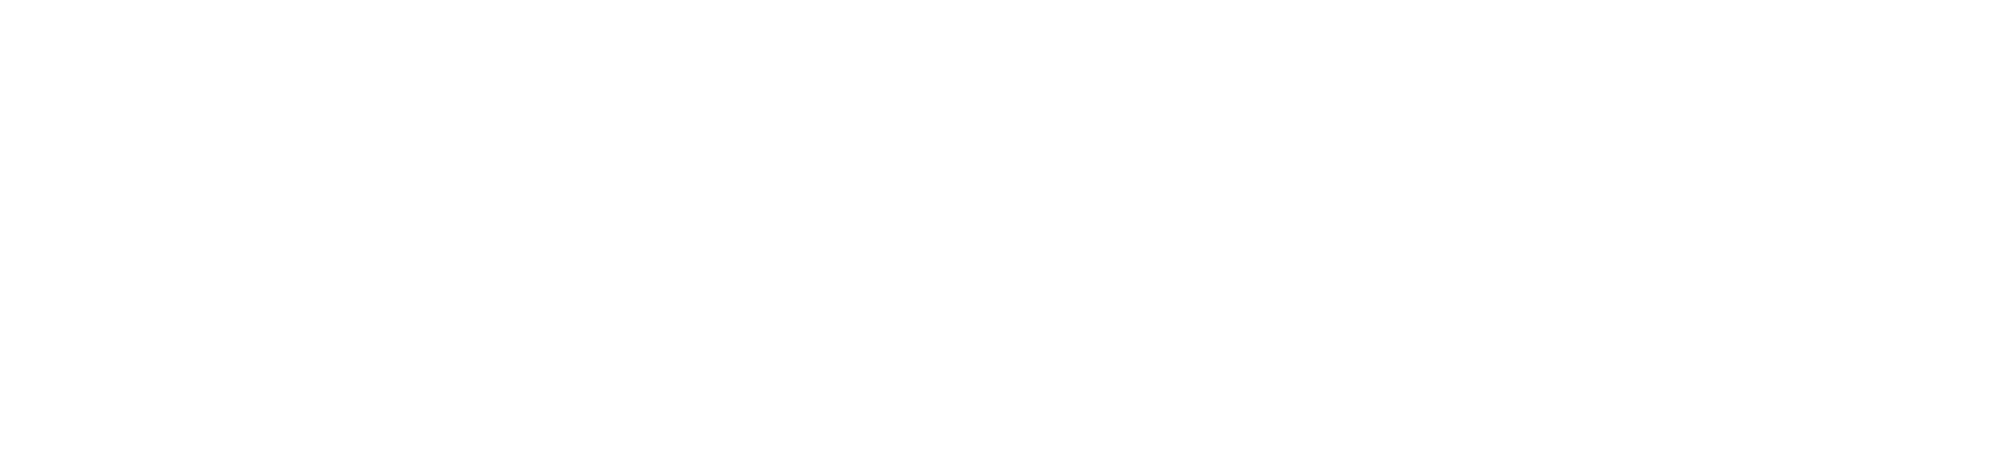 Väsby Lås & Larm logotyp